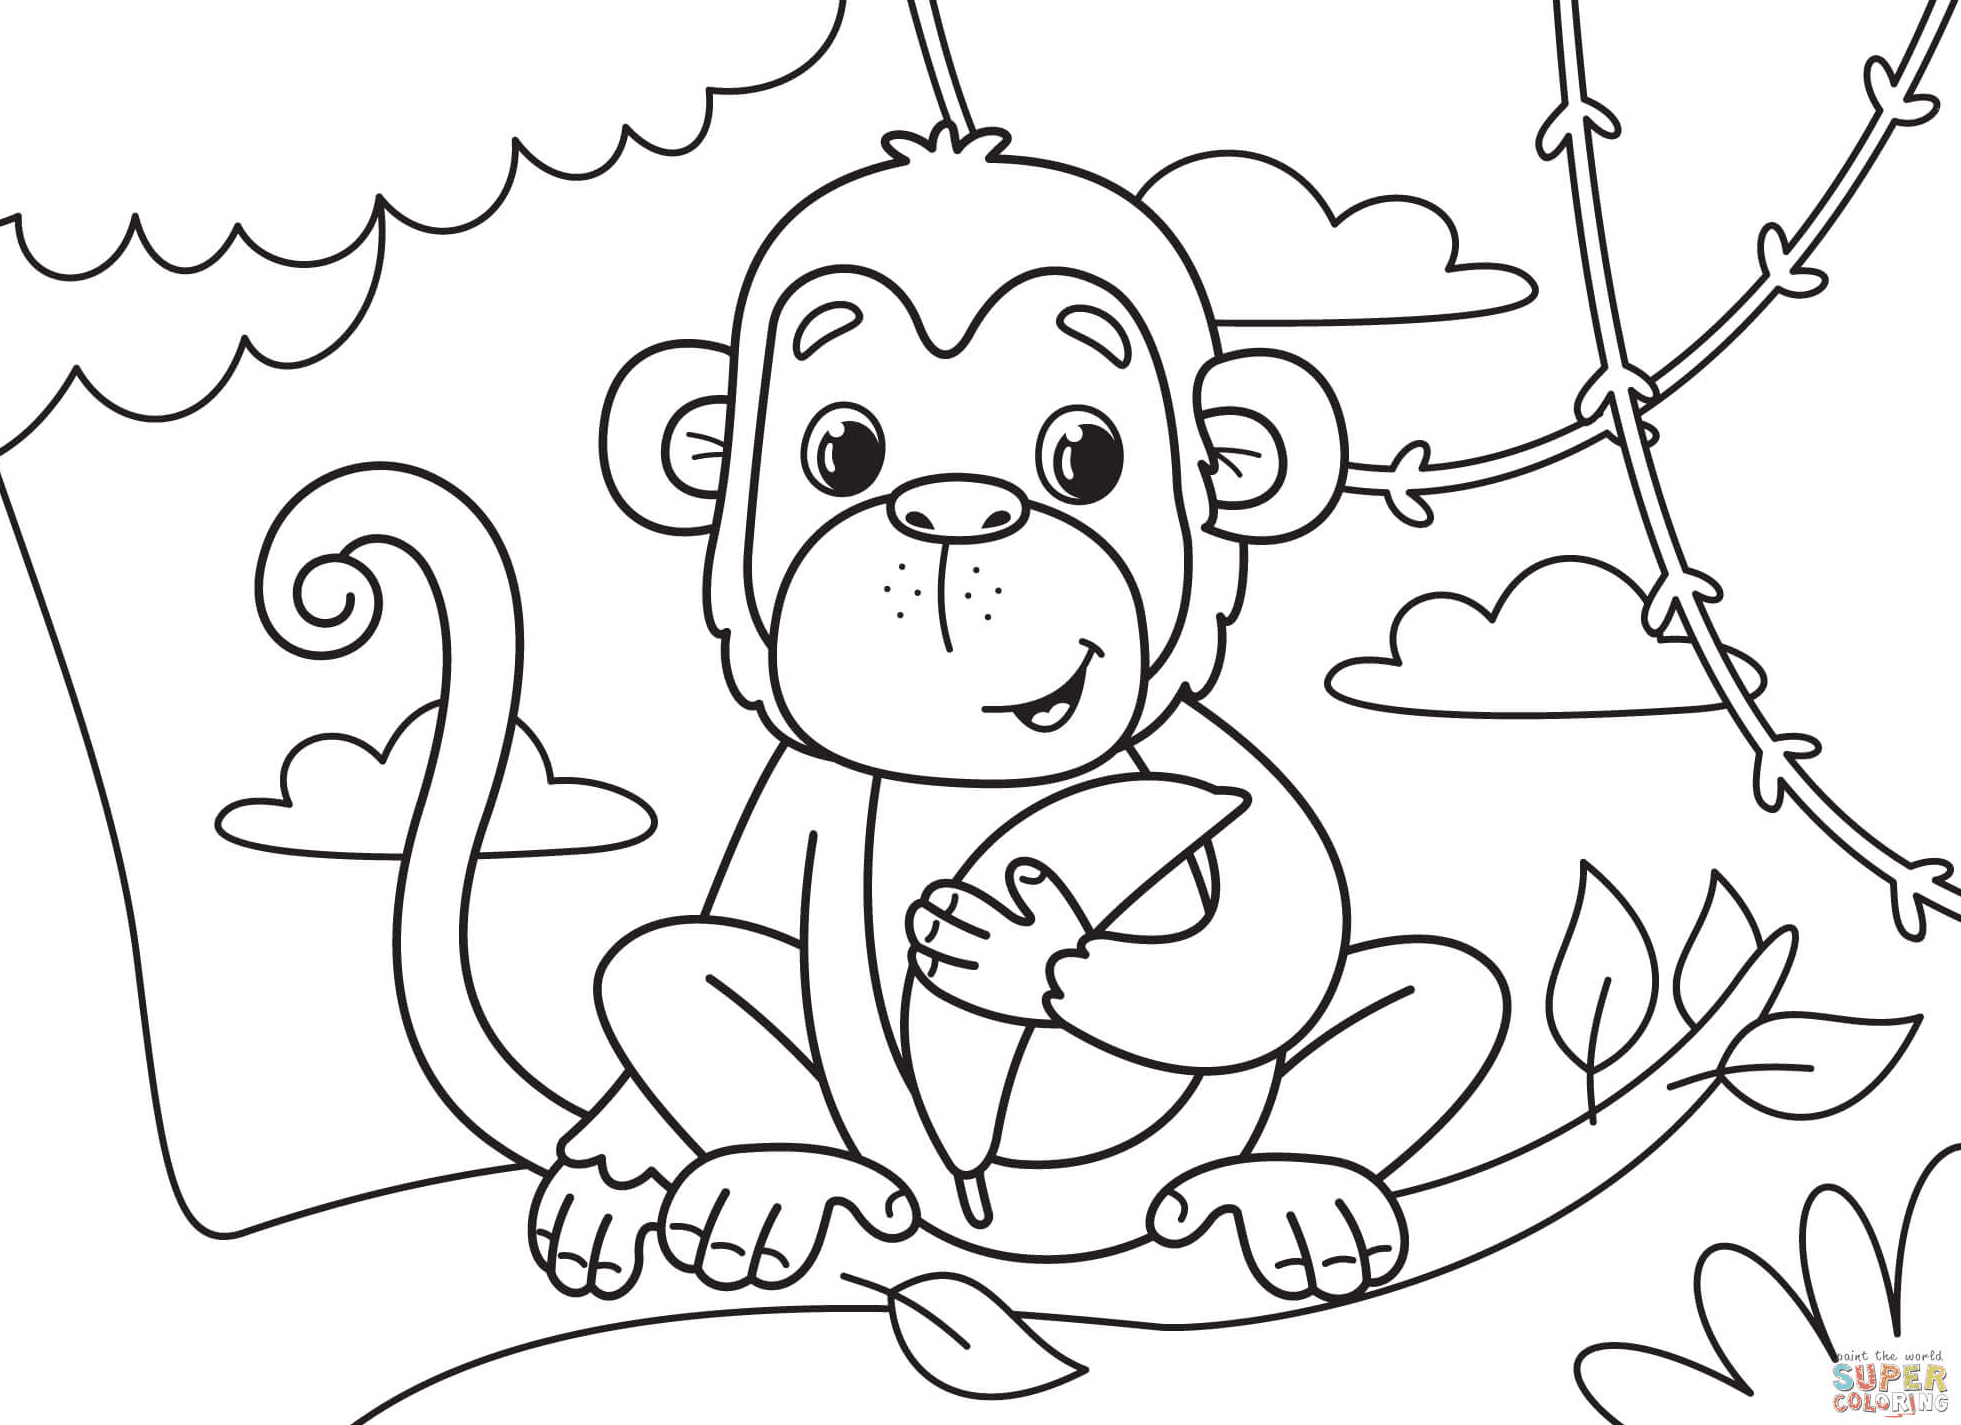 Macaco com Banana from Macaco